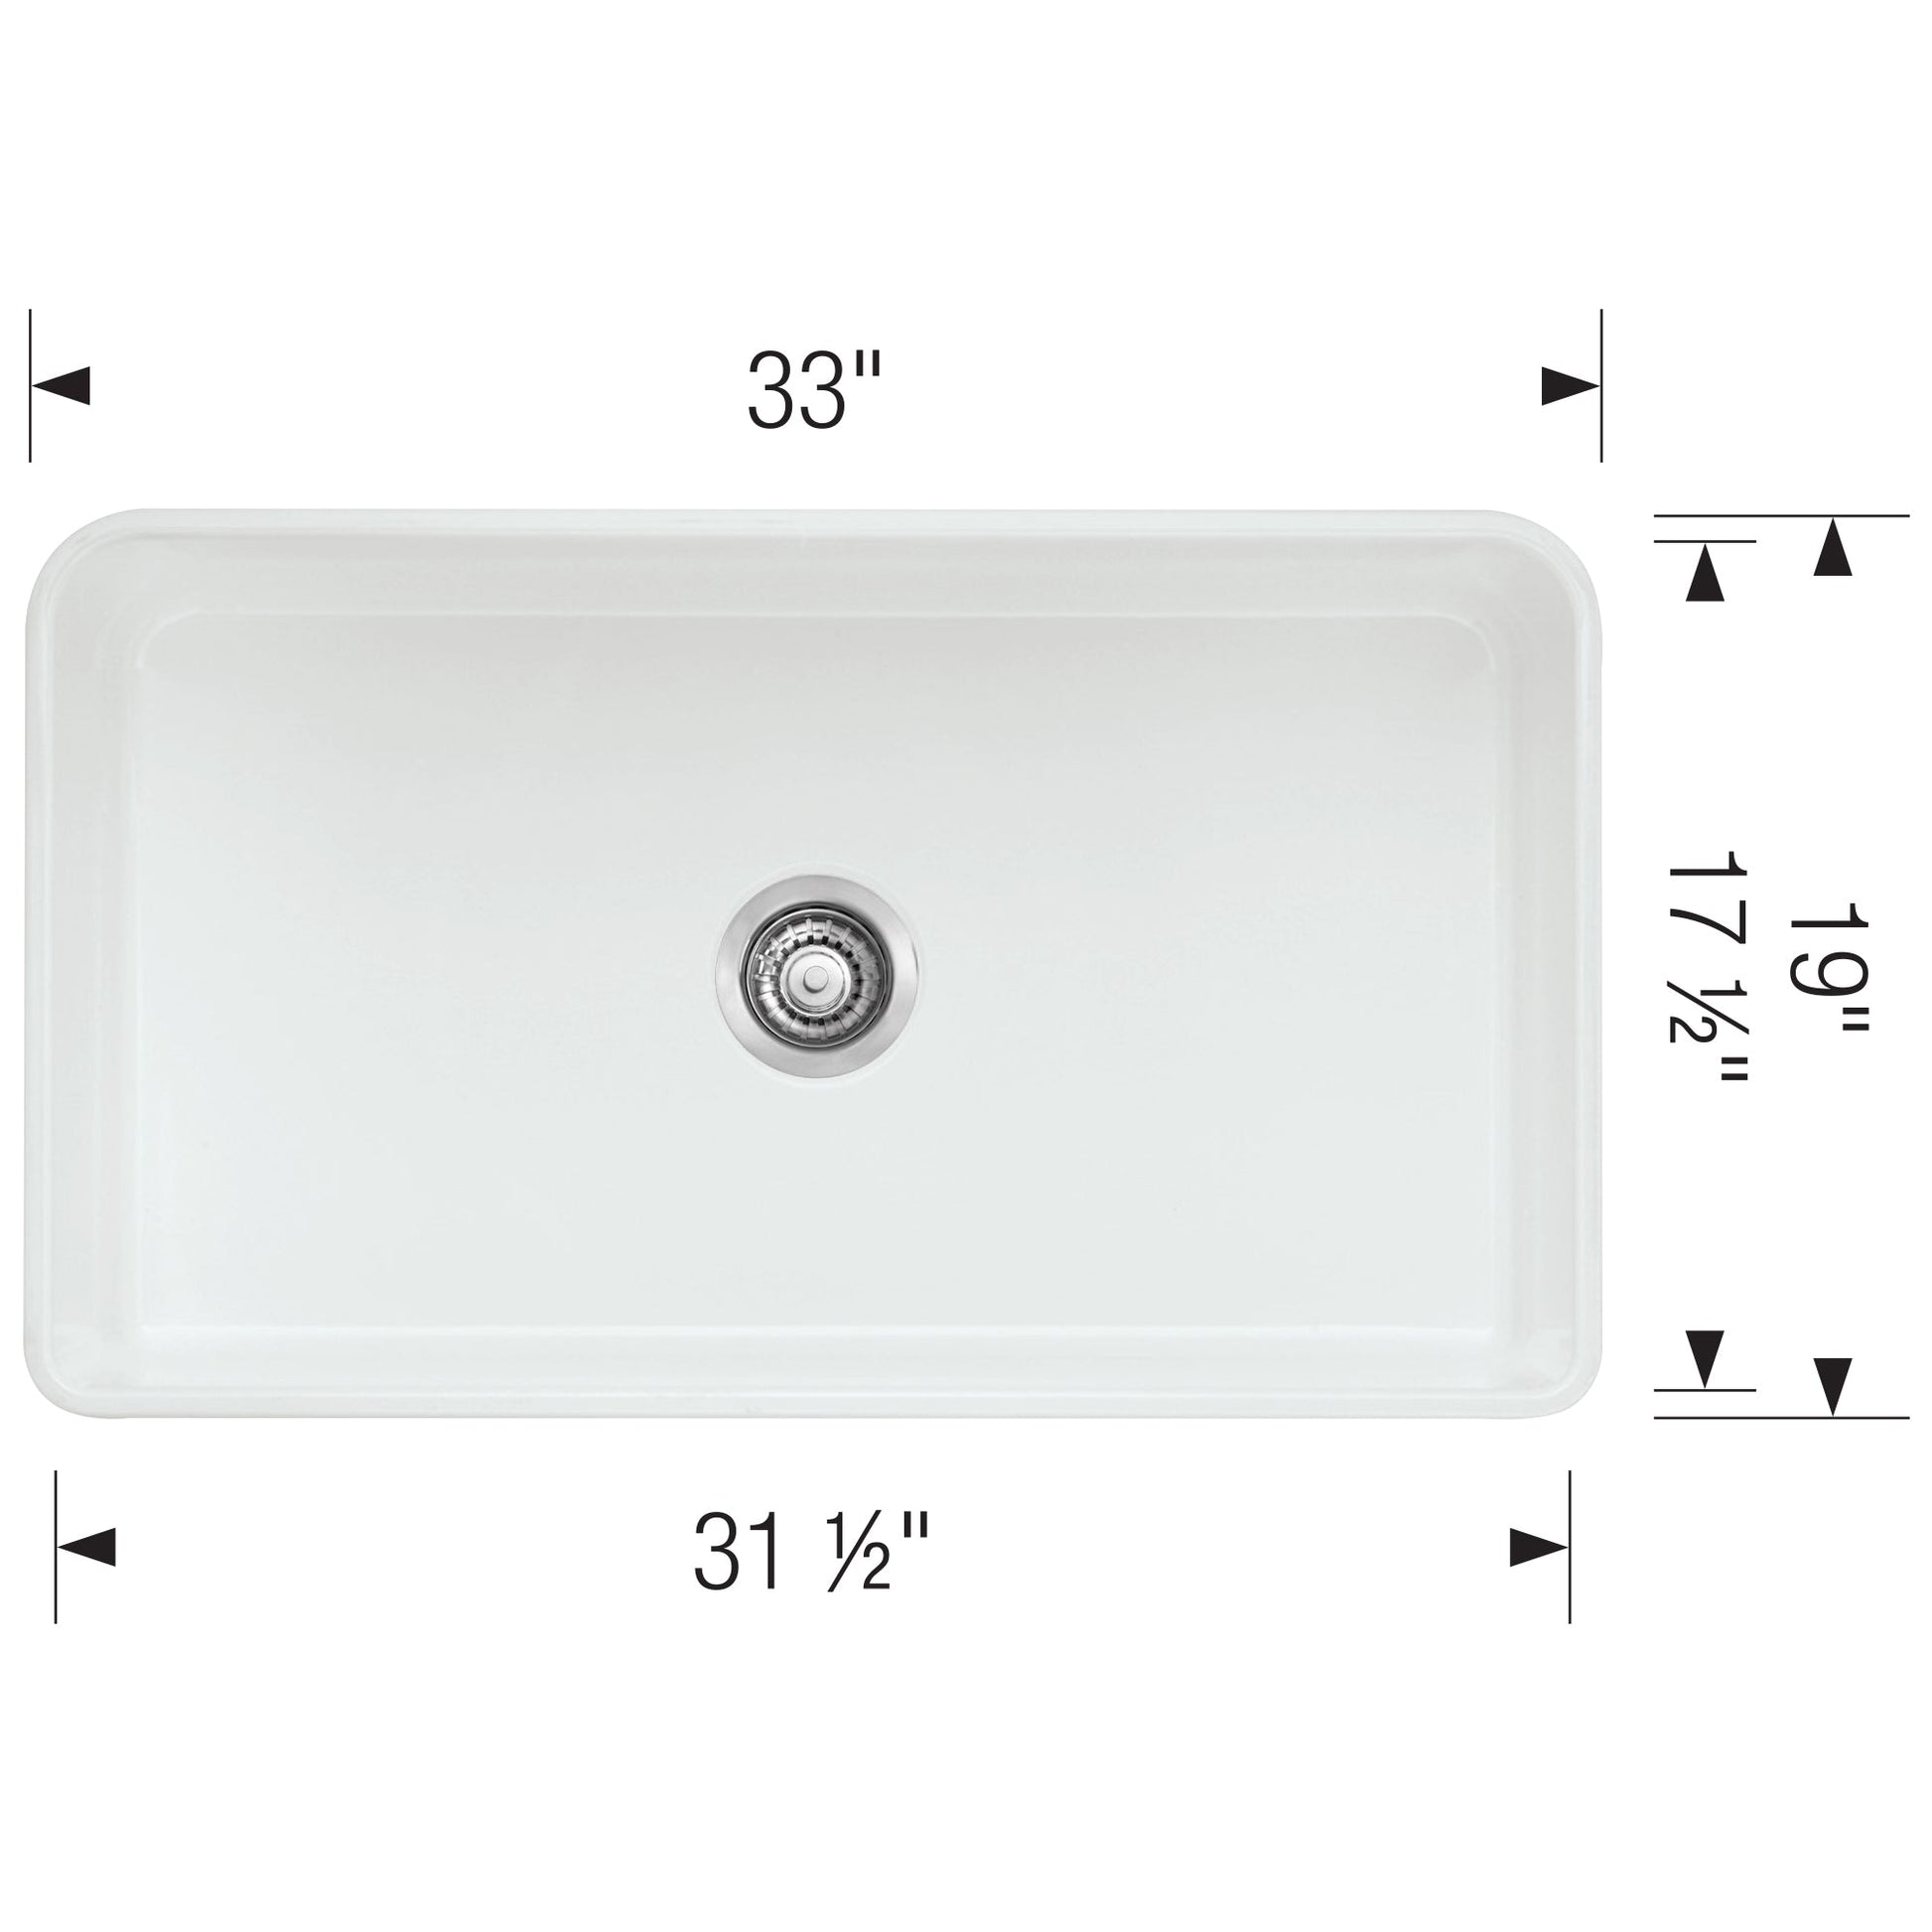 Blanco Cerana 33" Apron Single Bowl Kitchen Sink